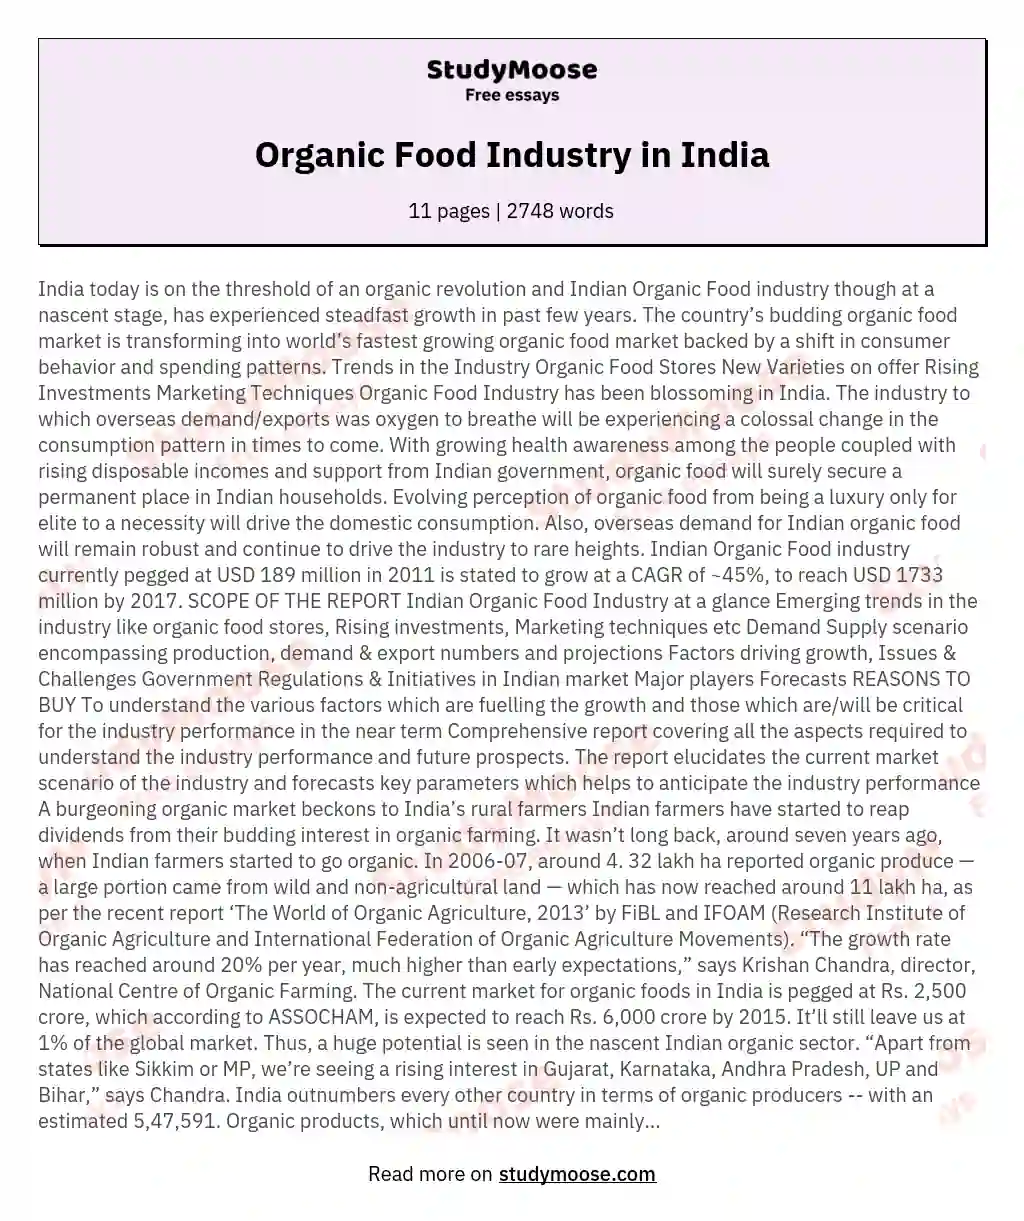 Organic Food Industry in India essay